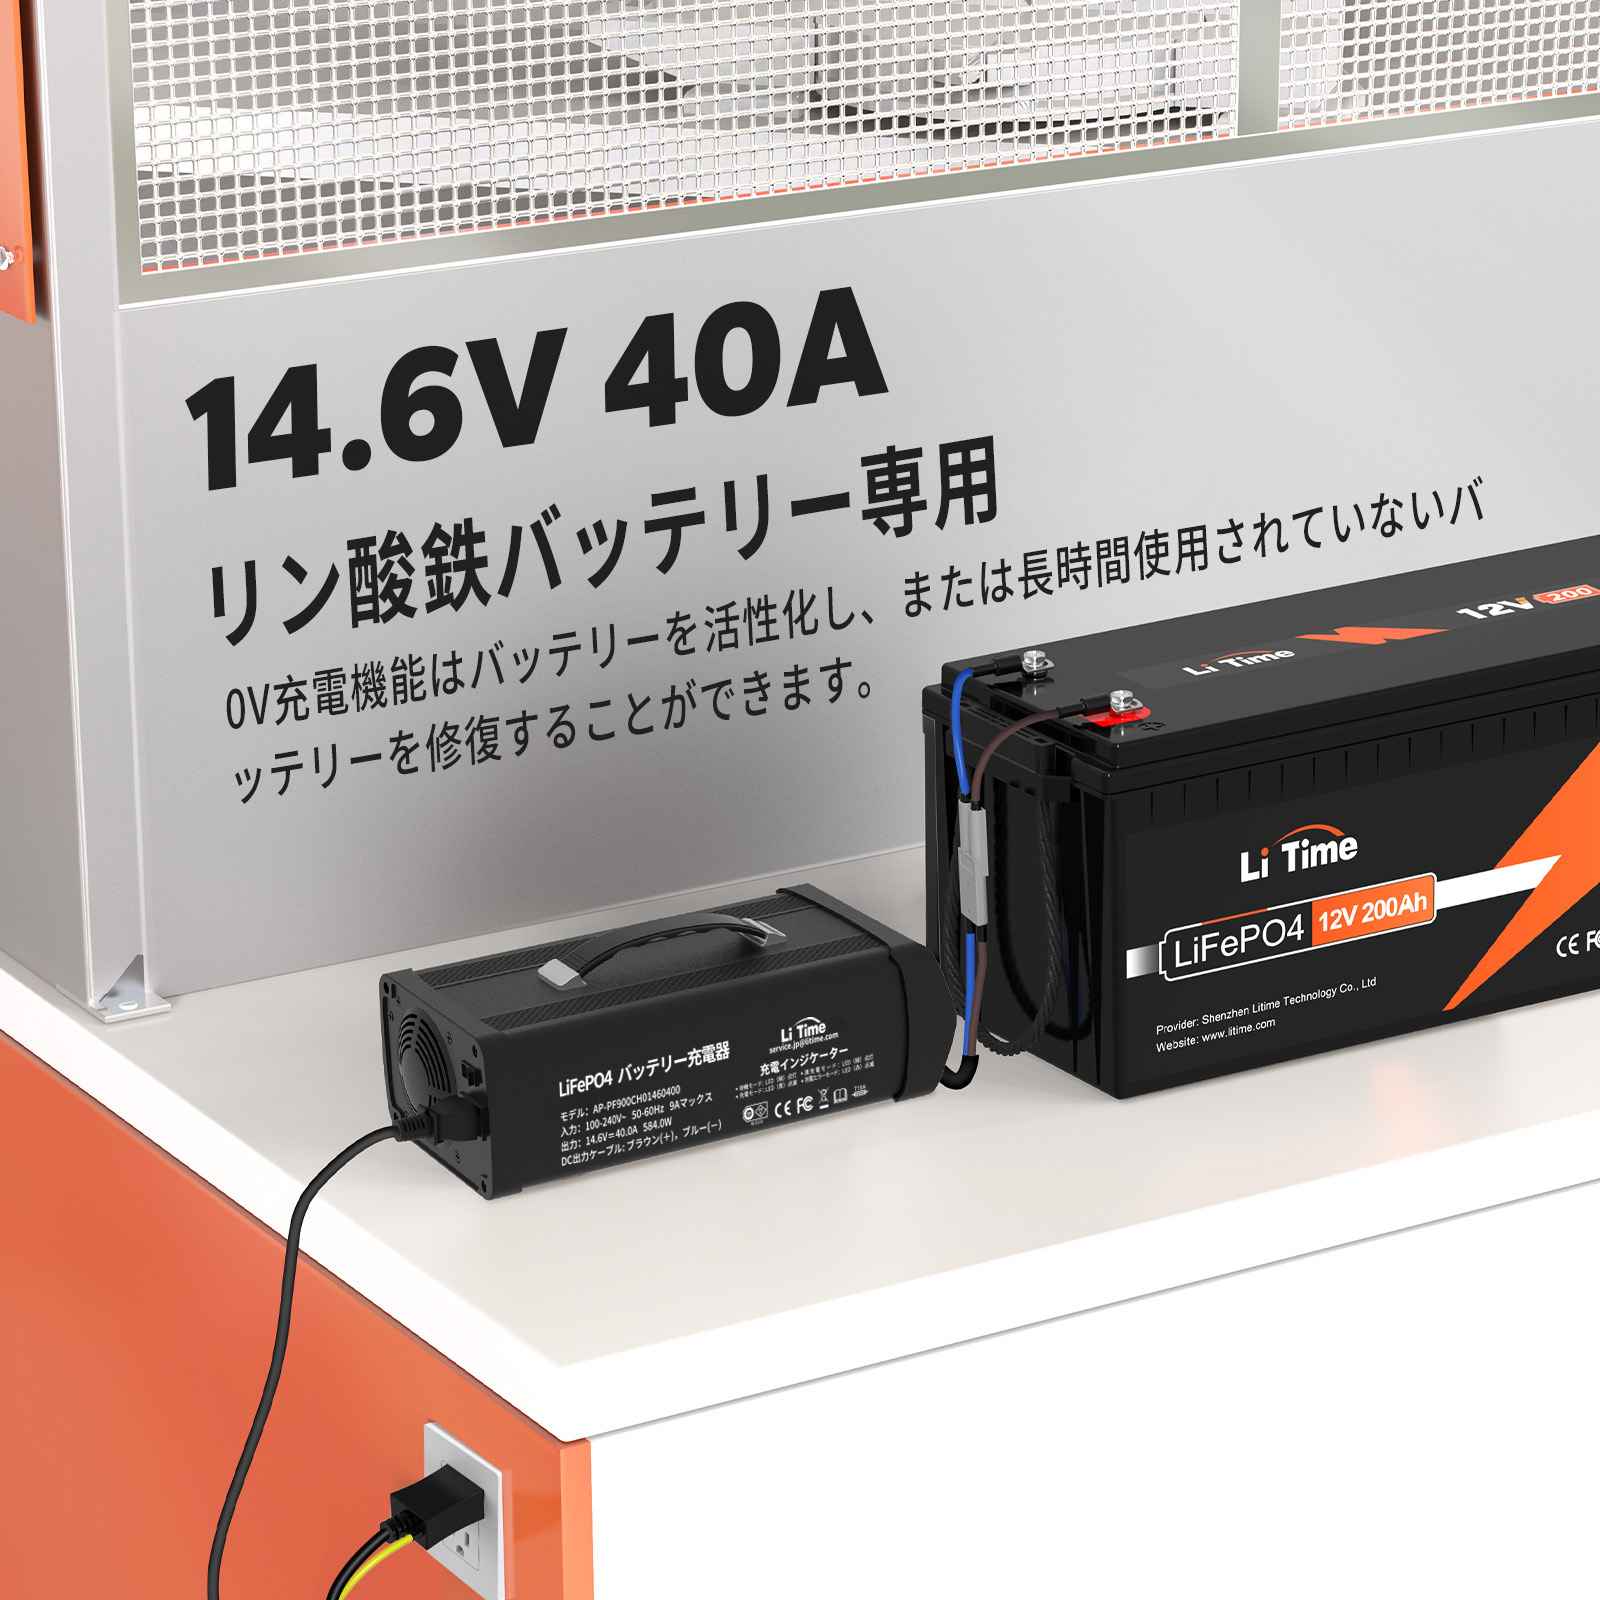 LiTime 14.6V 40A リン酸鉄リチウムバッテリー専用・速い充電器 12V